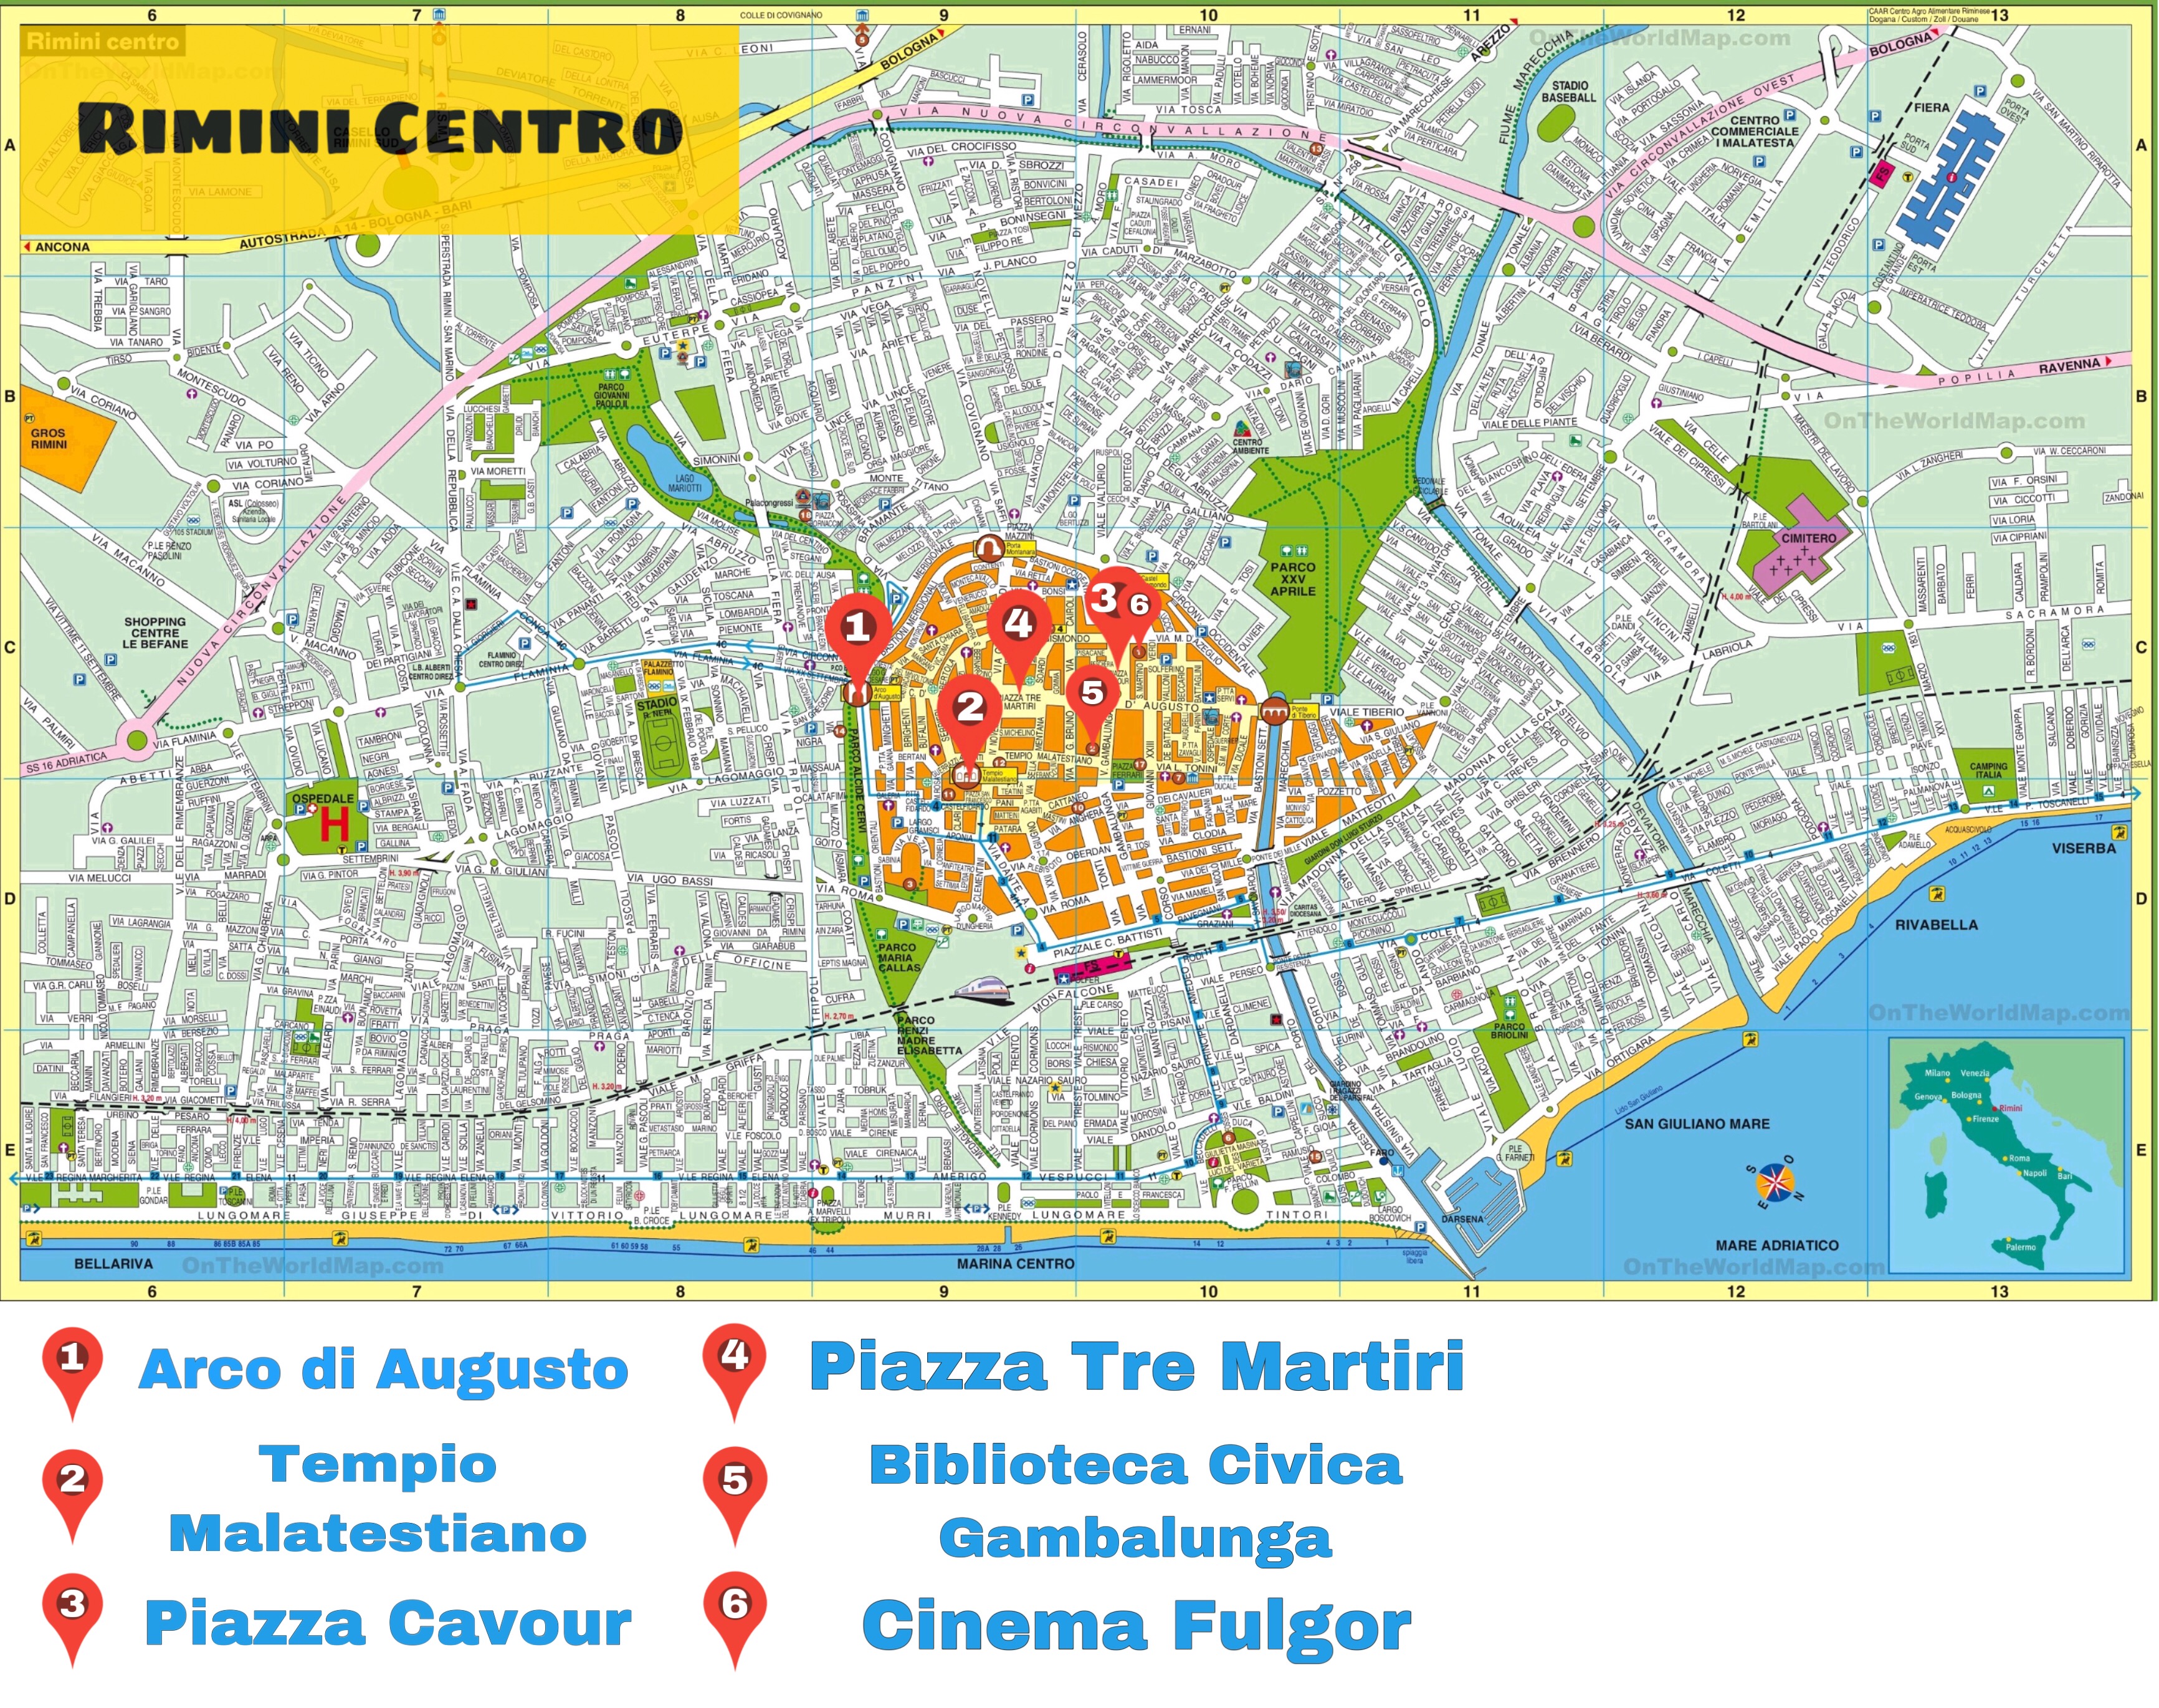 Rimini sightseeing map. Created by Simona Simeonova.